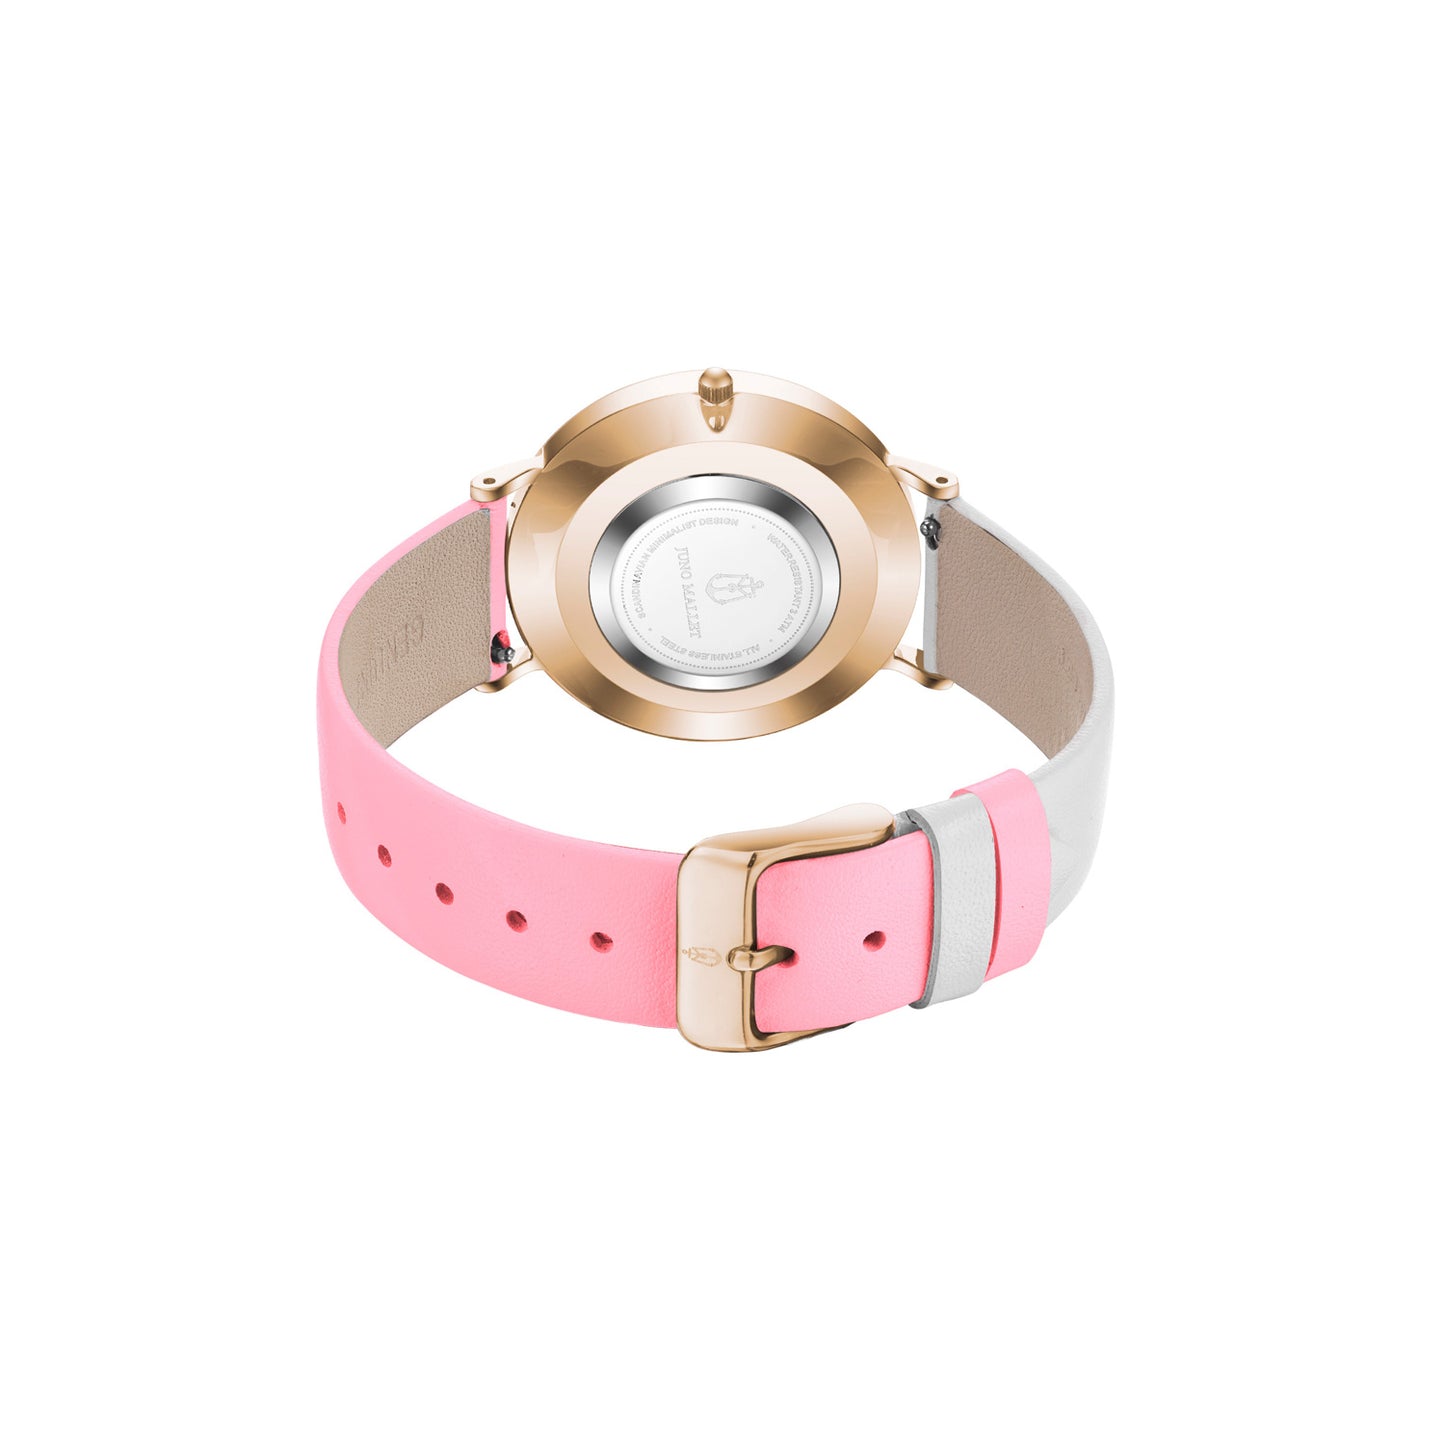 CLASH / Flamingo Pink / White / 36mm / Women Bracelet Watch